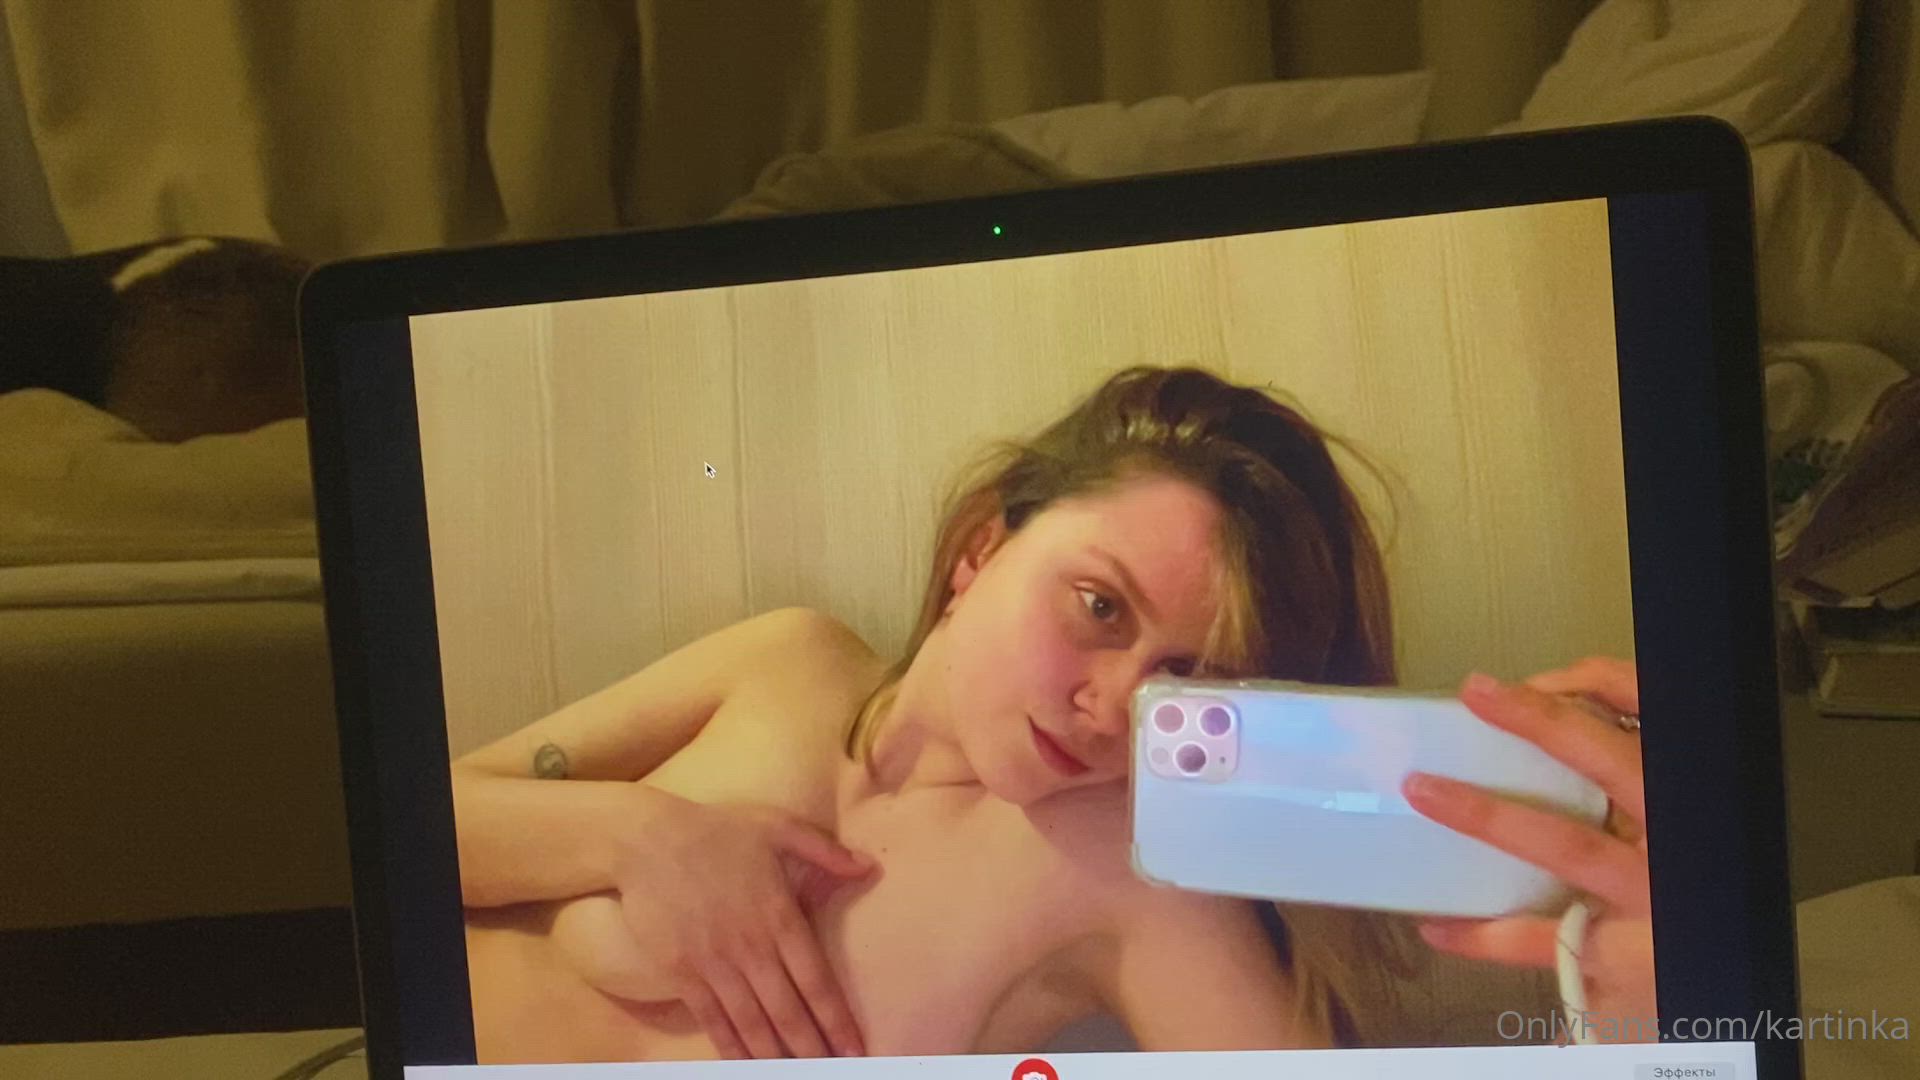 Teen porn video with onlyfans model kartinka <strong>@kartinka</strong>